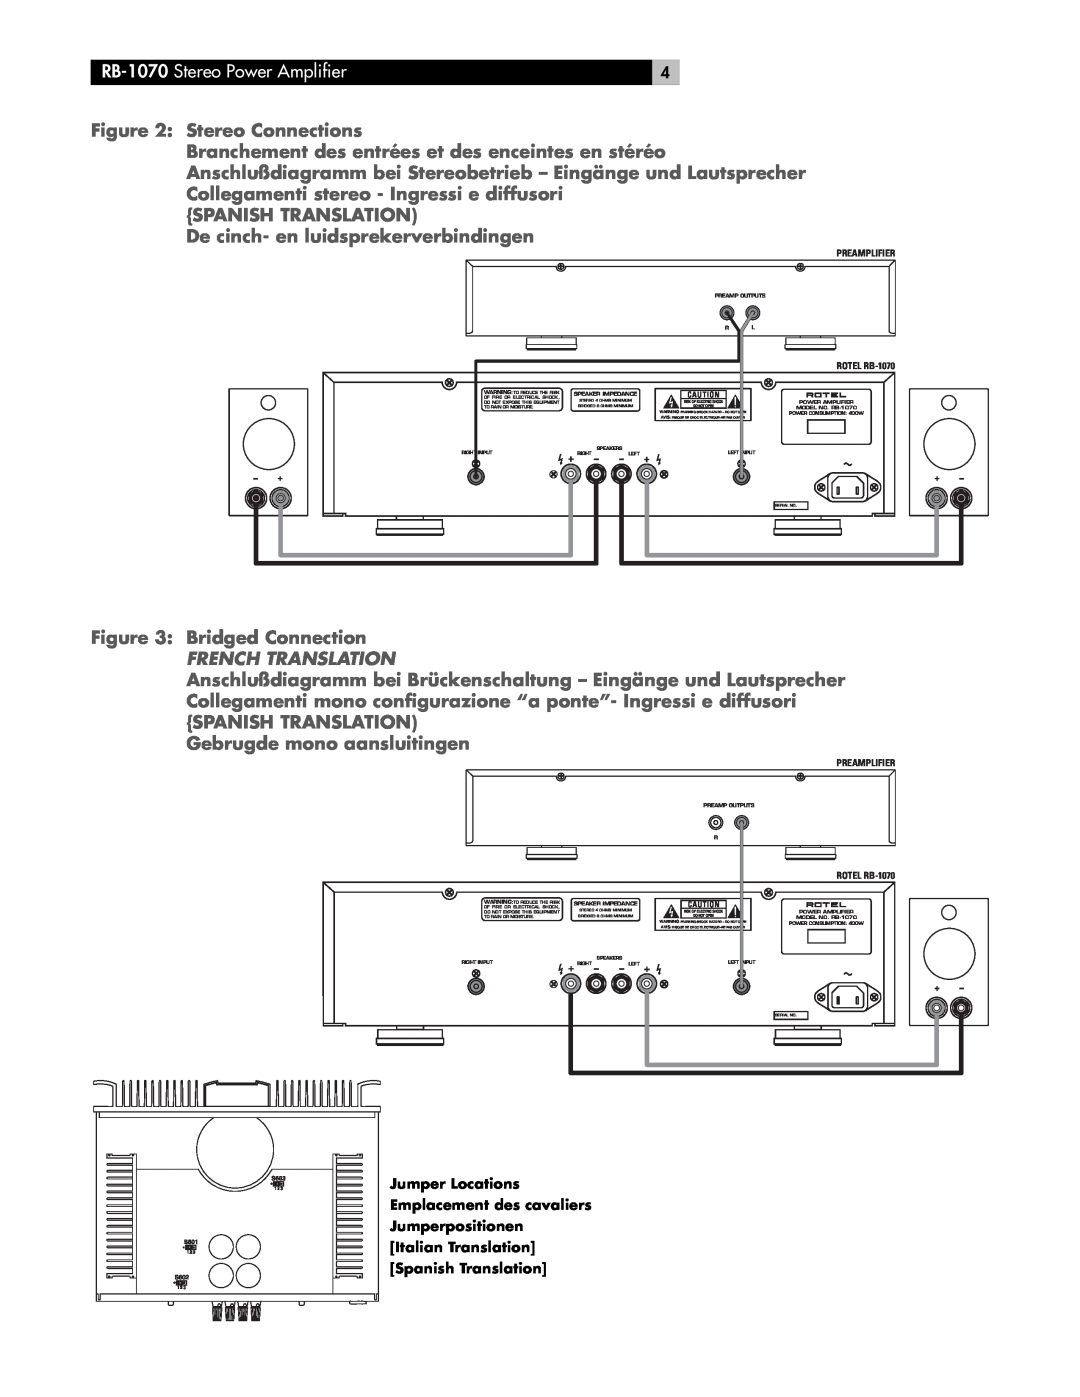 Rotel Stereo Connections, De cinch- en luidsprekerverbindingen, Bridged Connection, RB-1070Stereo Power Amplifier 